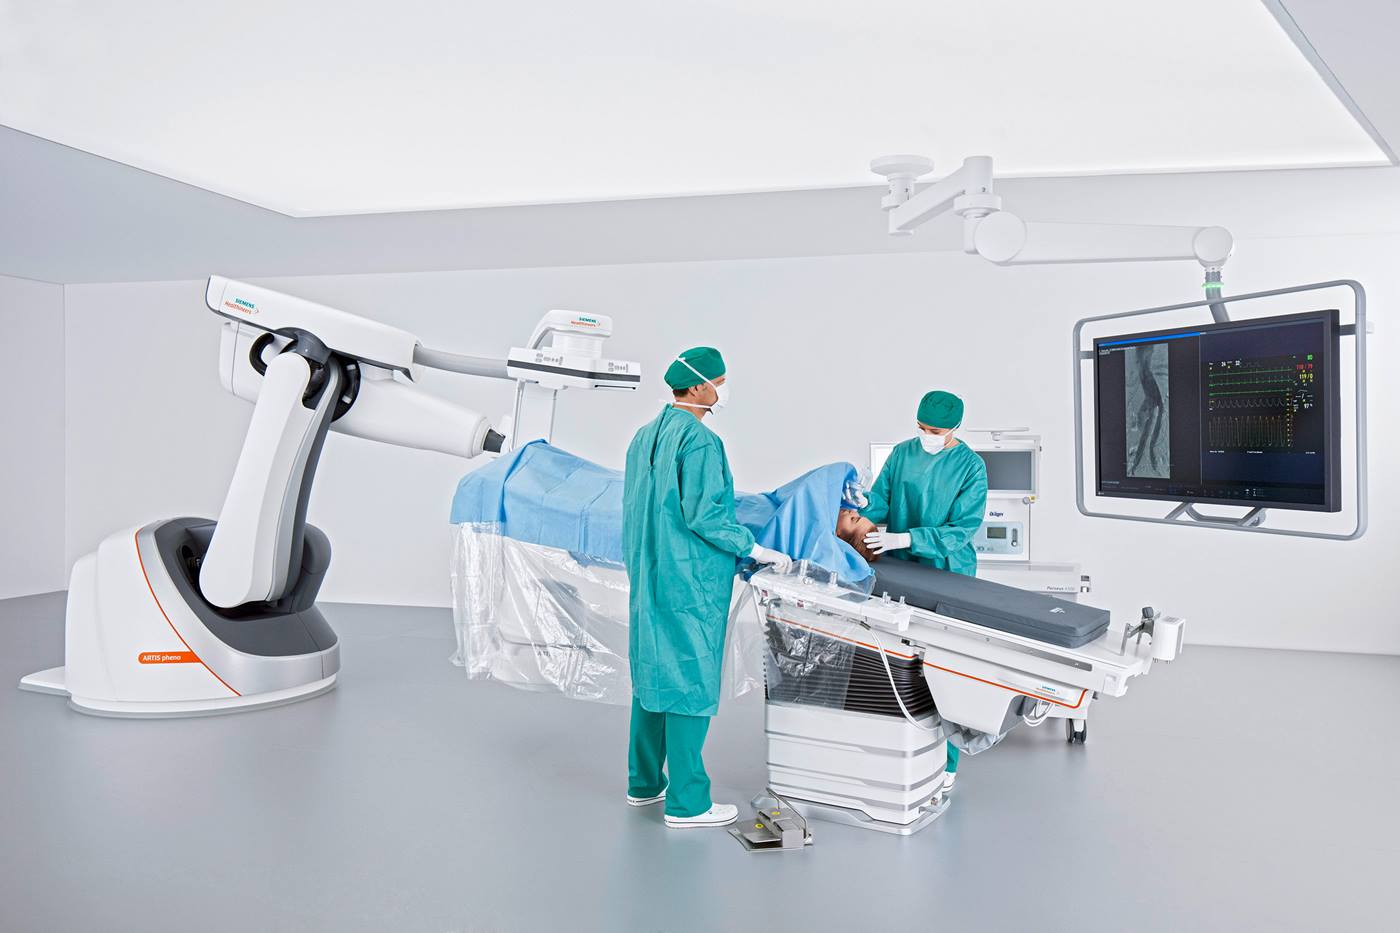 Artis pheno with KUKA robots at Siemens Healthcare